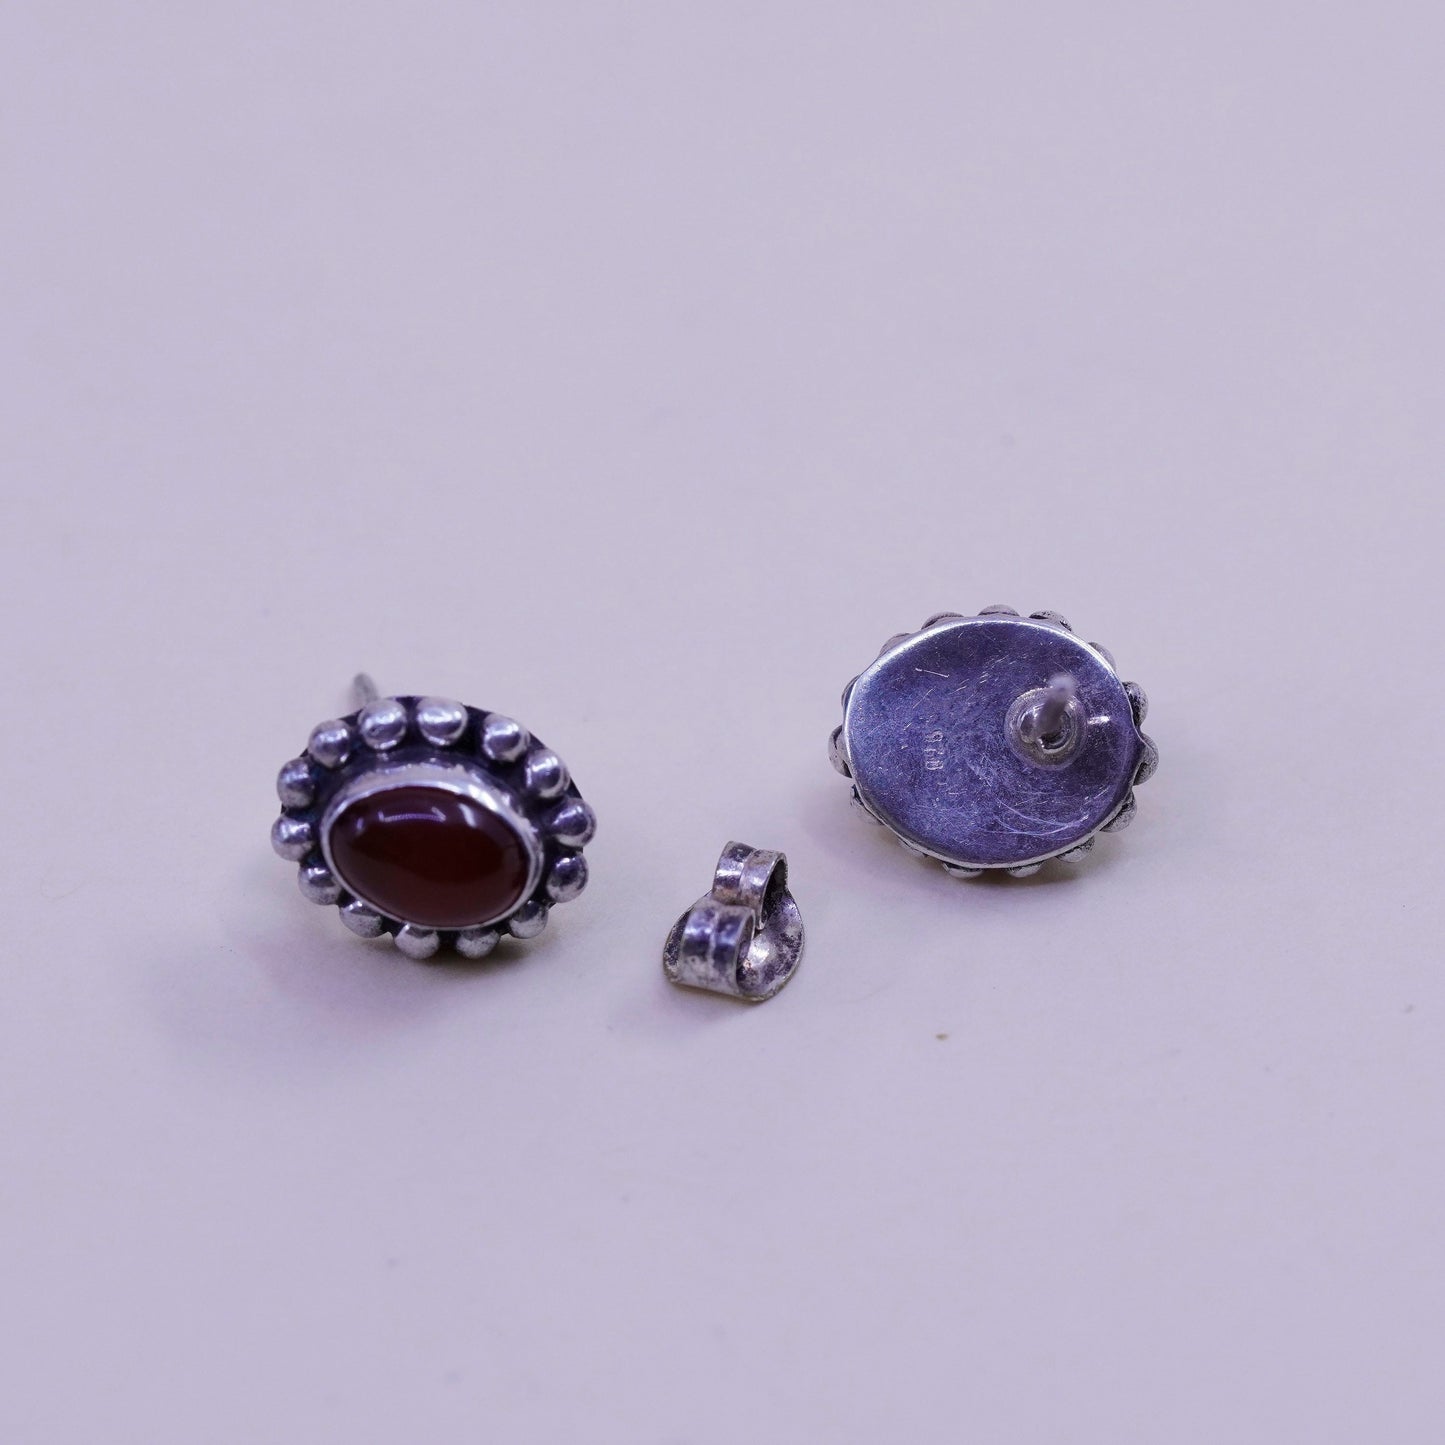 Vintage Sterling 925 silver handmade earrings, oval carnelian studs and beads